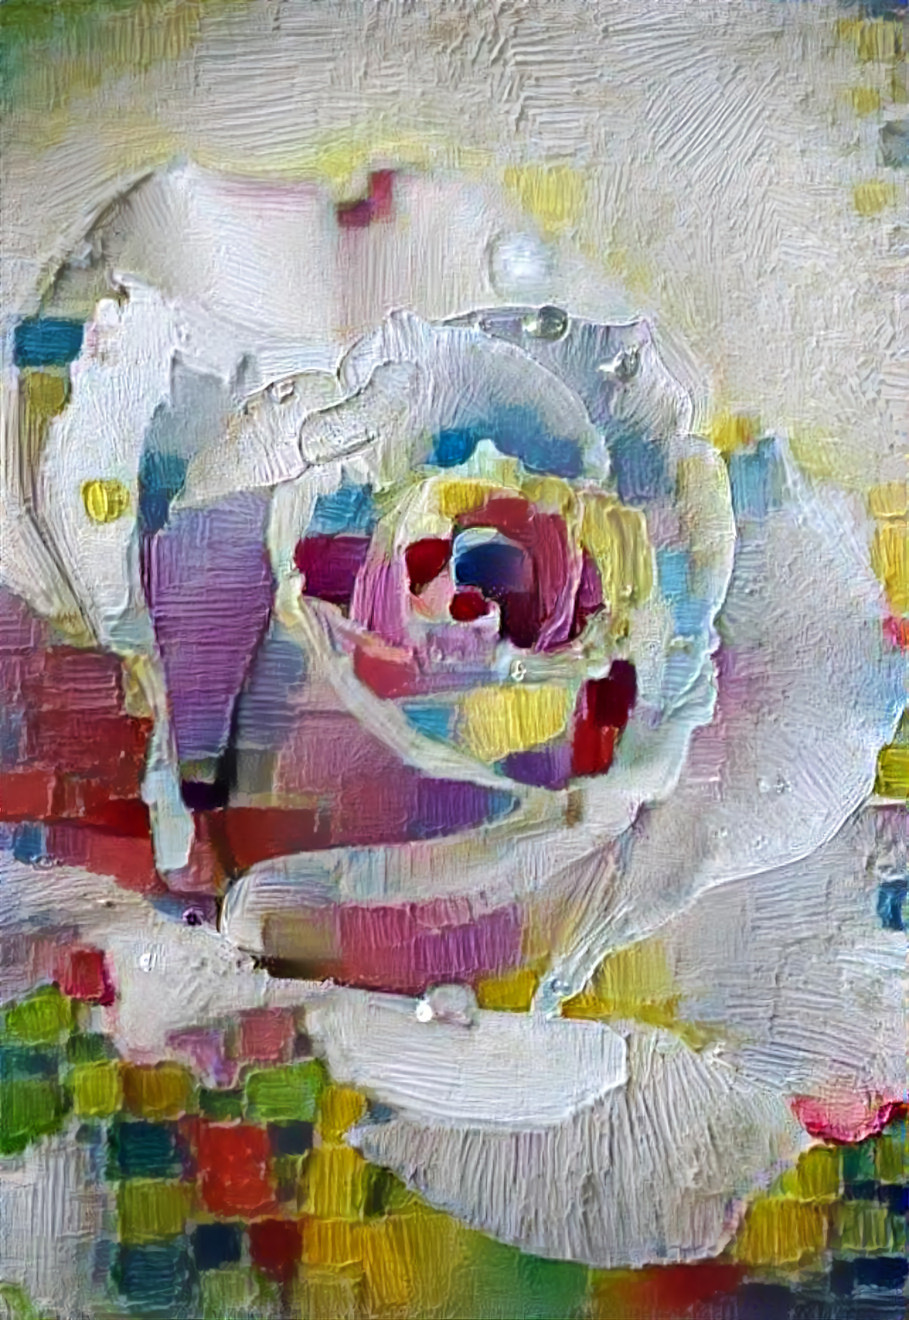 white rose - square brushed painting